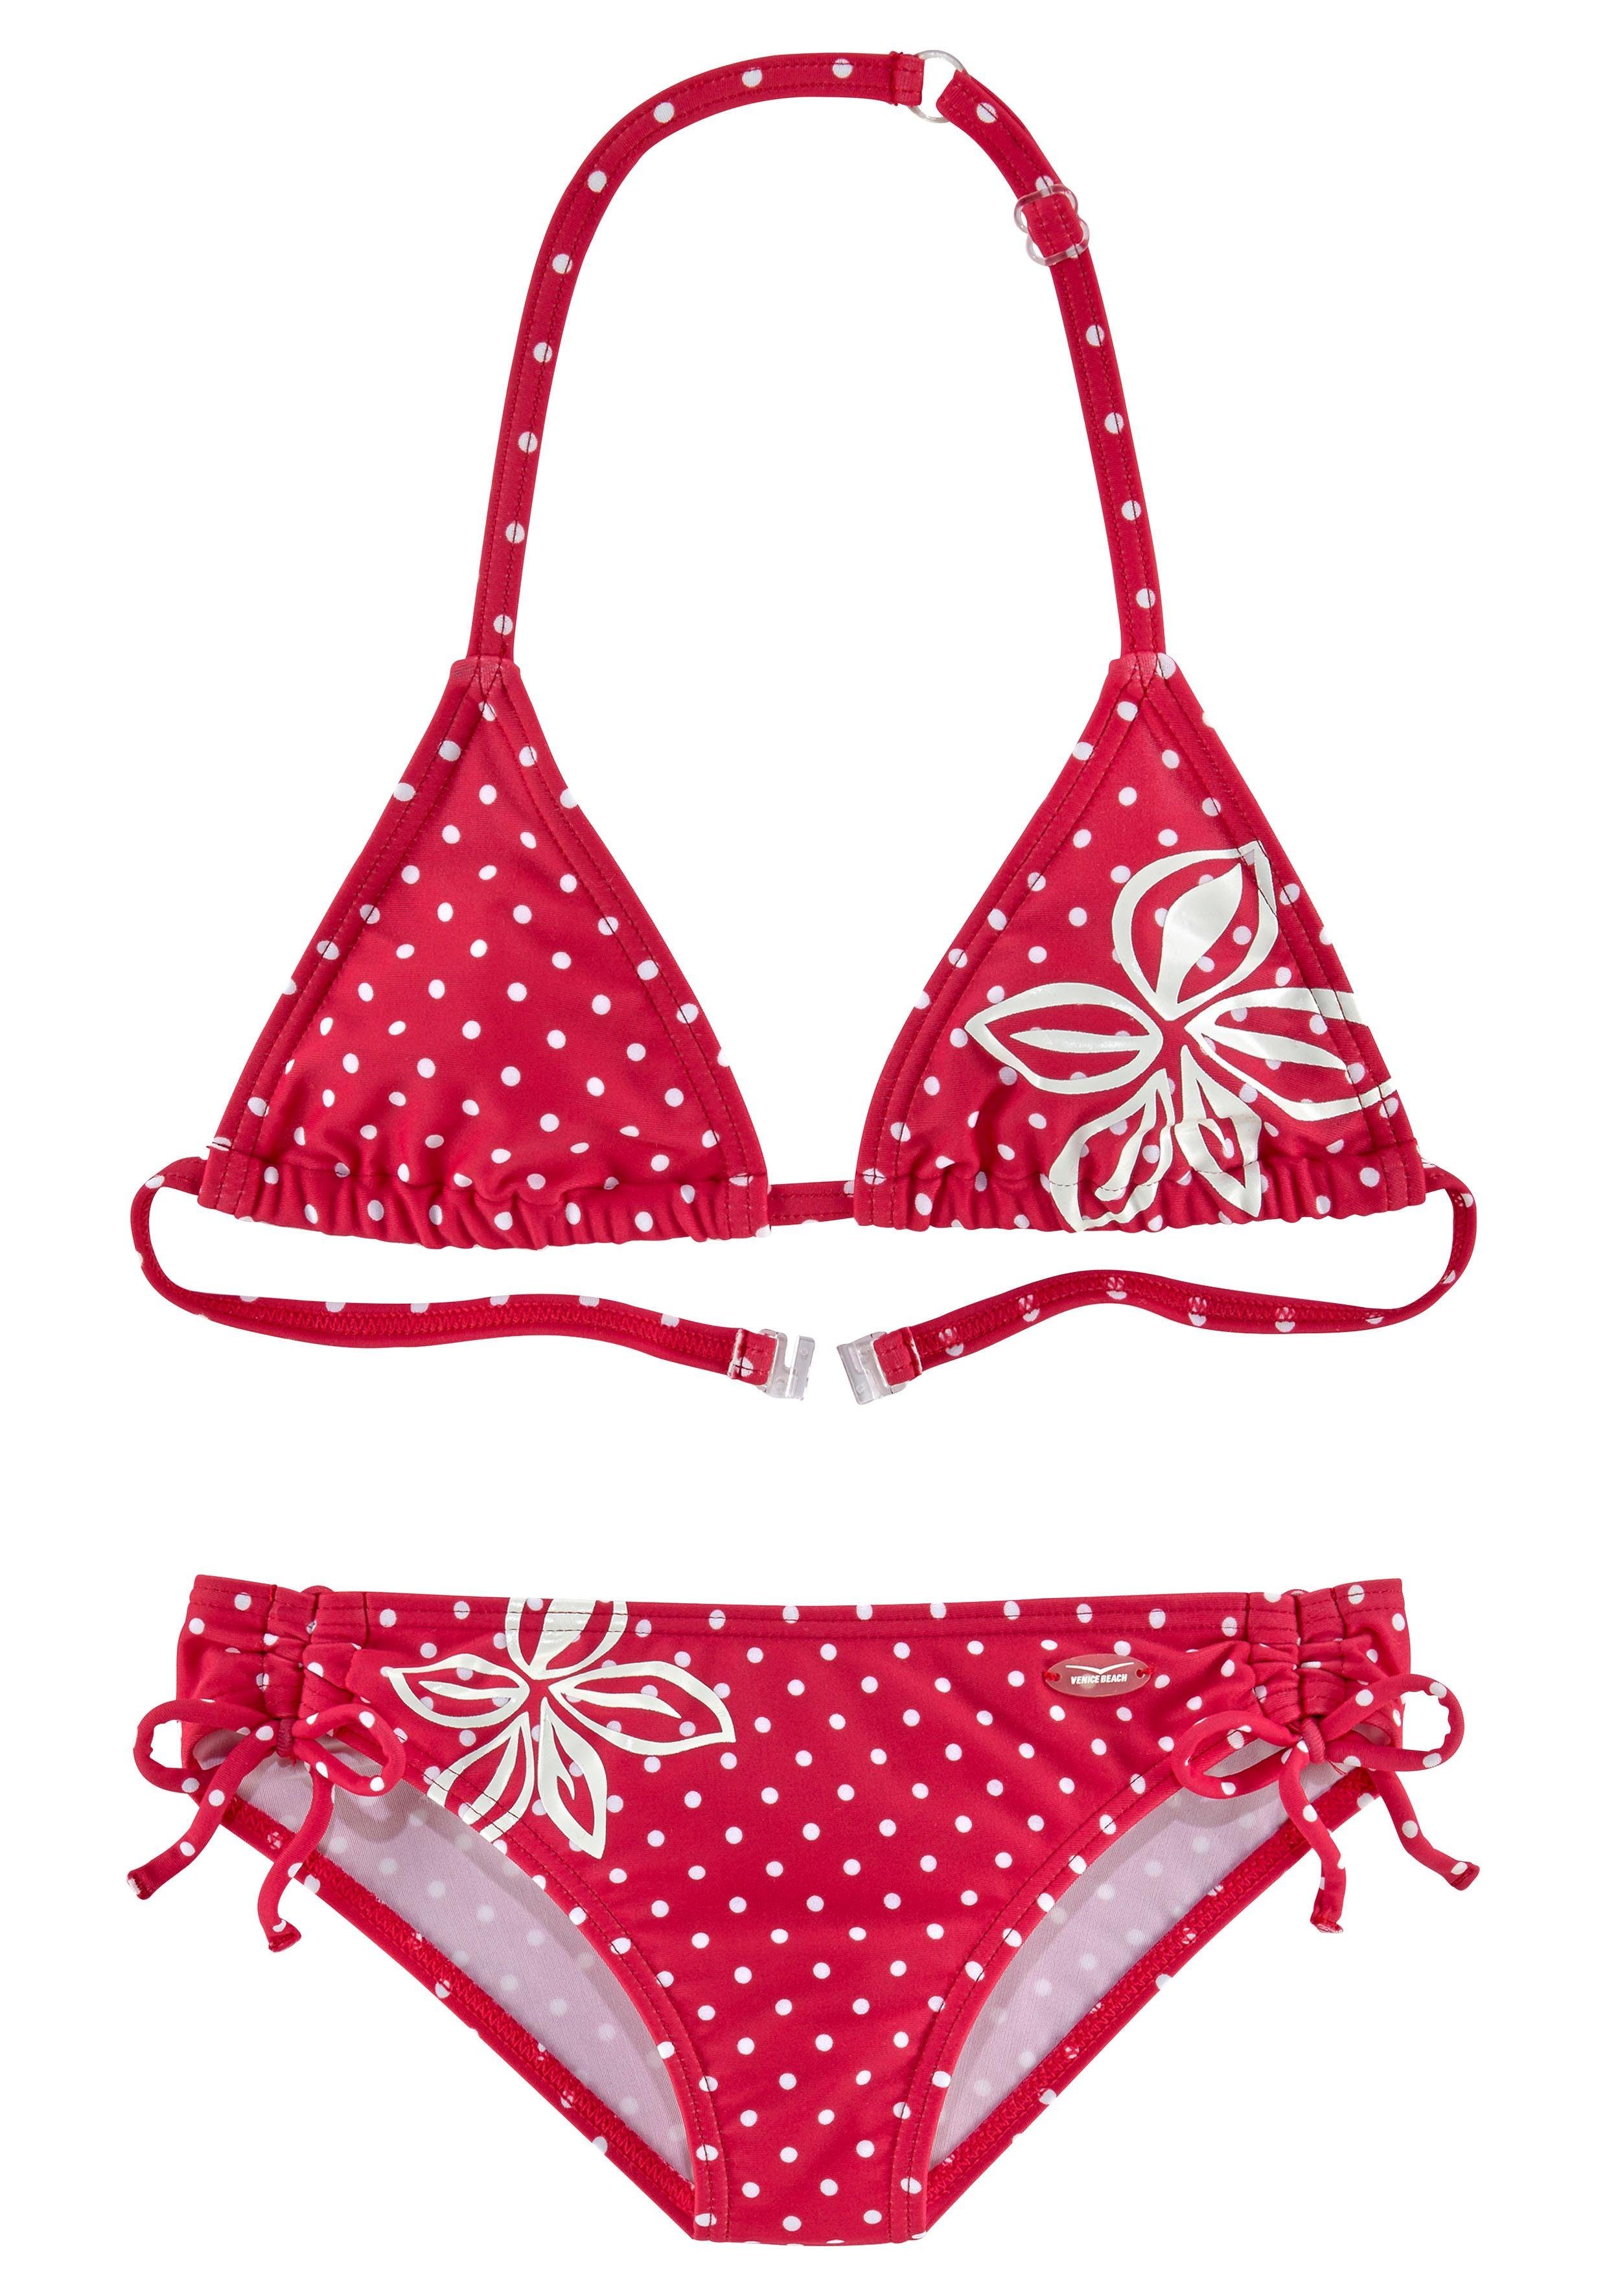 Venice rot modischen im Punkte-Design Beach Triangel-Bikini